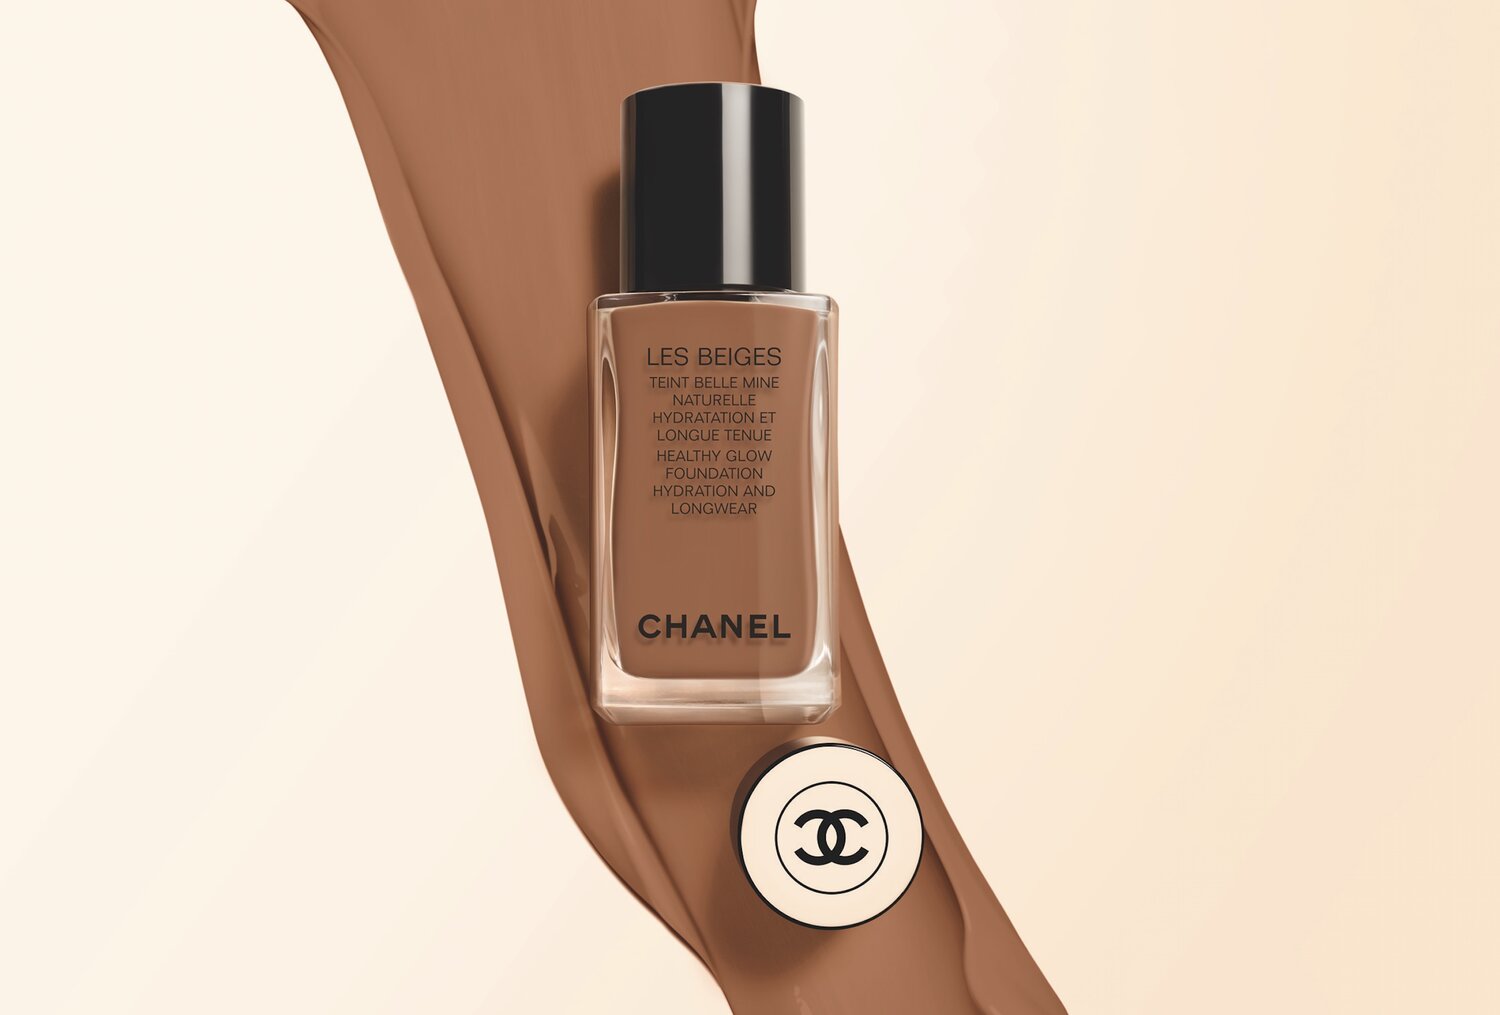 Chanel Les Beiges Healthy Glow Foundation Hydration and Longwear